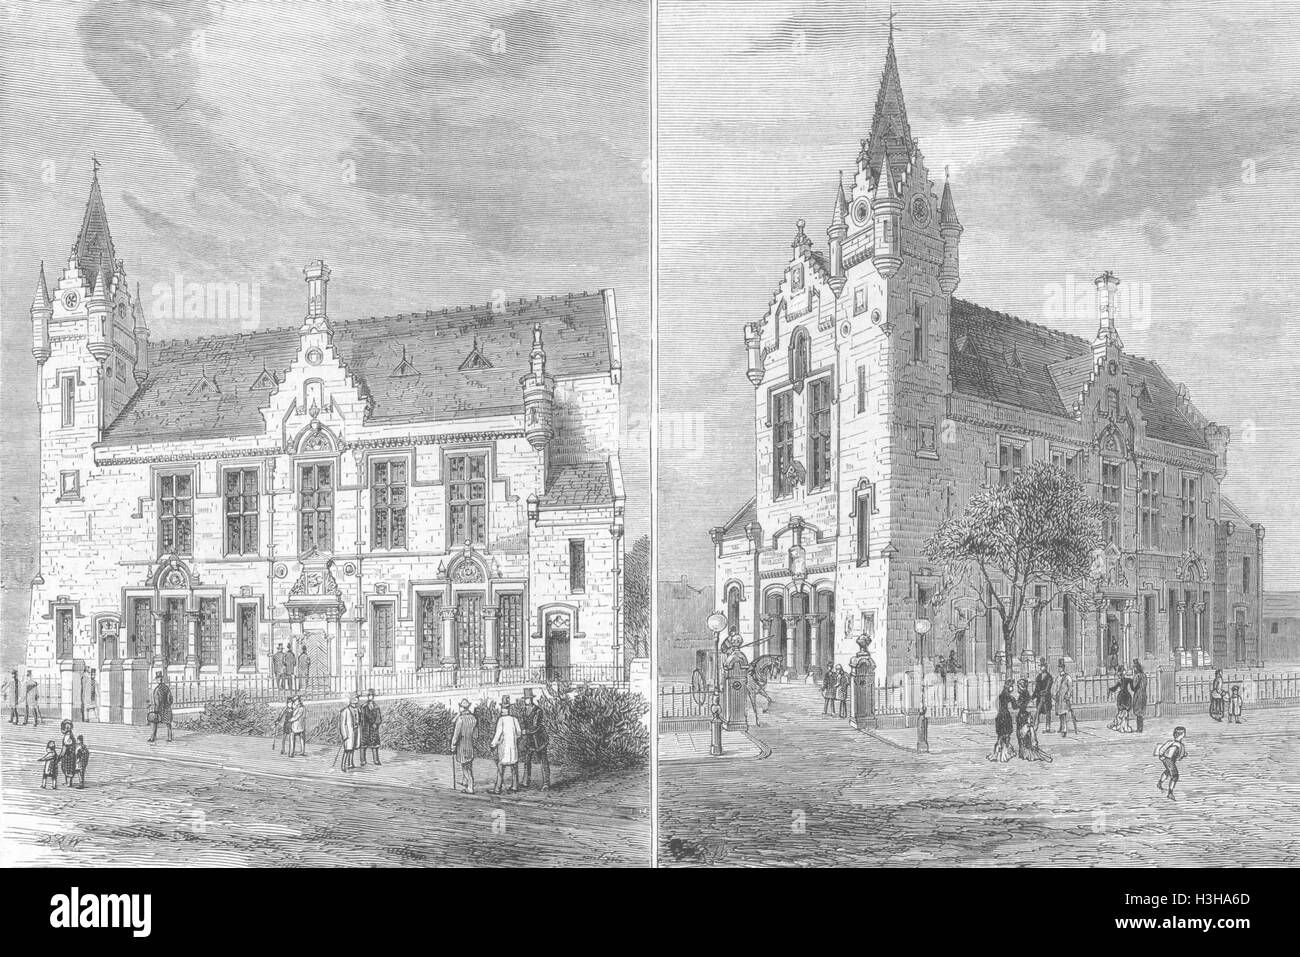 SCOTLAND Burgh Hall, Crosshill & Govan Hill, Glasgow 1880. The Graphic ...